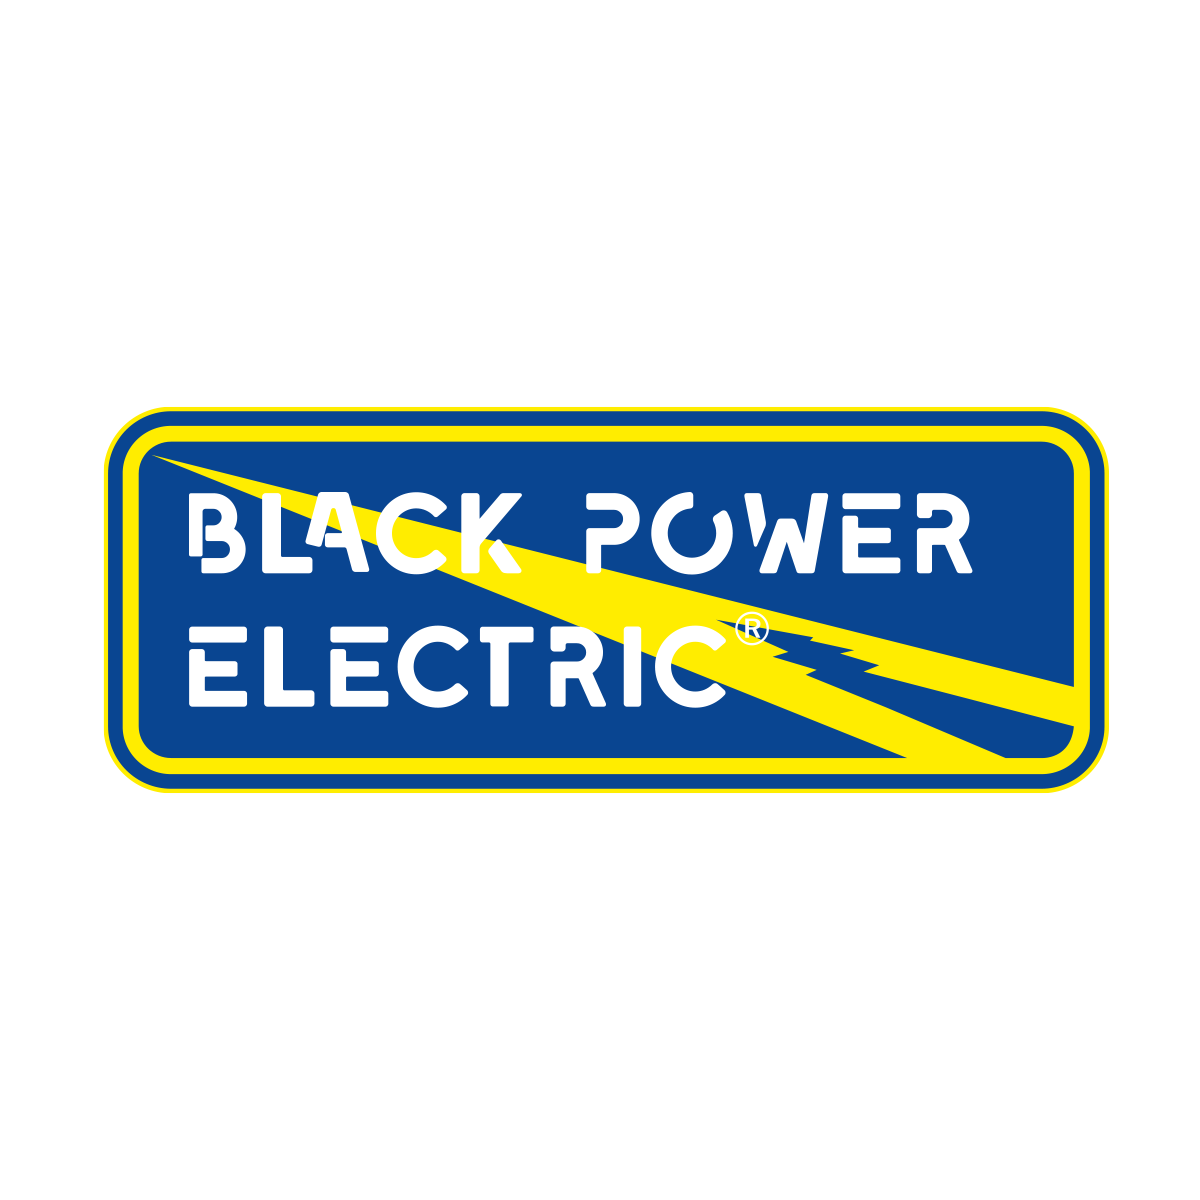 BLACK POWER ELECTRIC